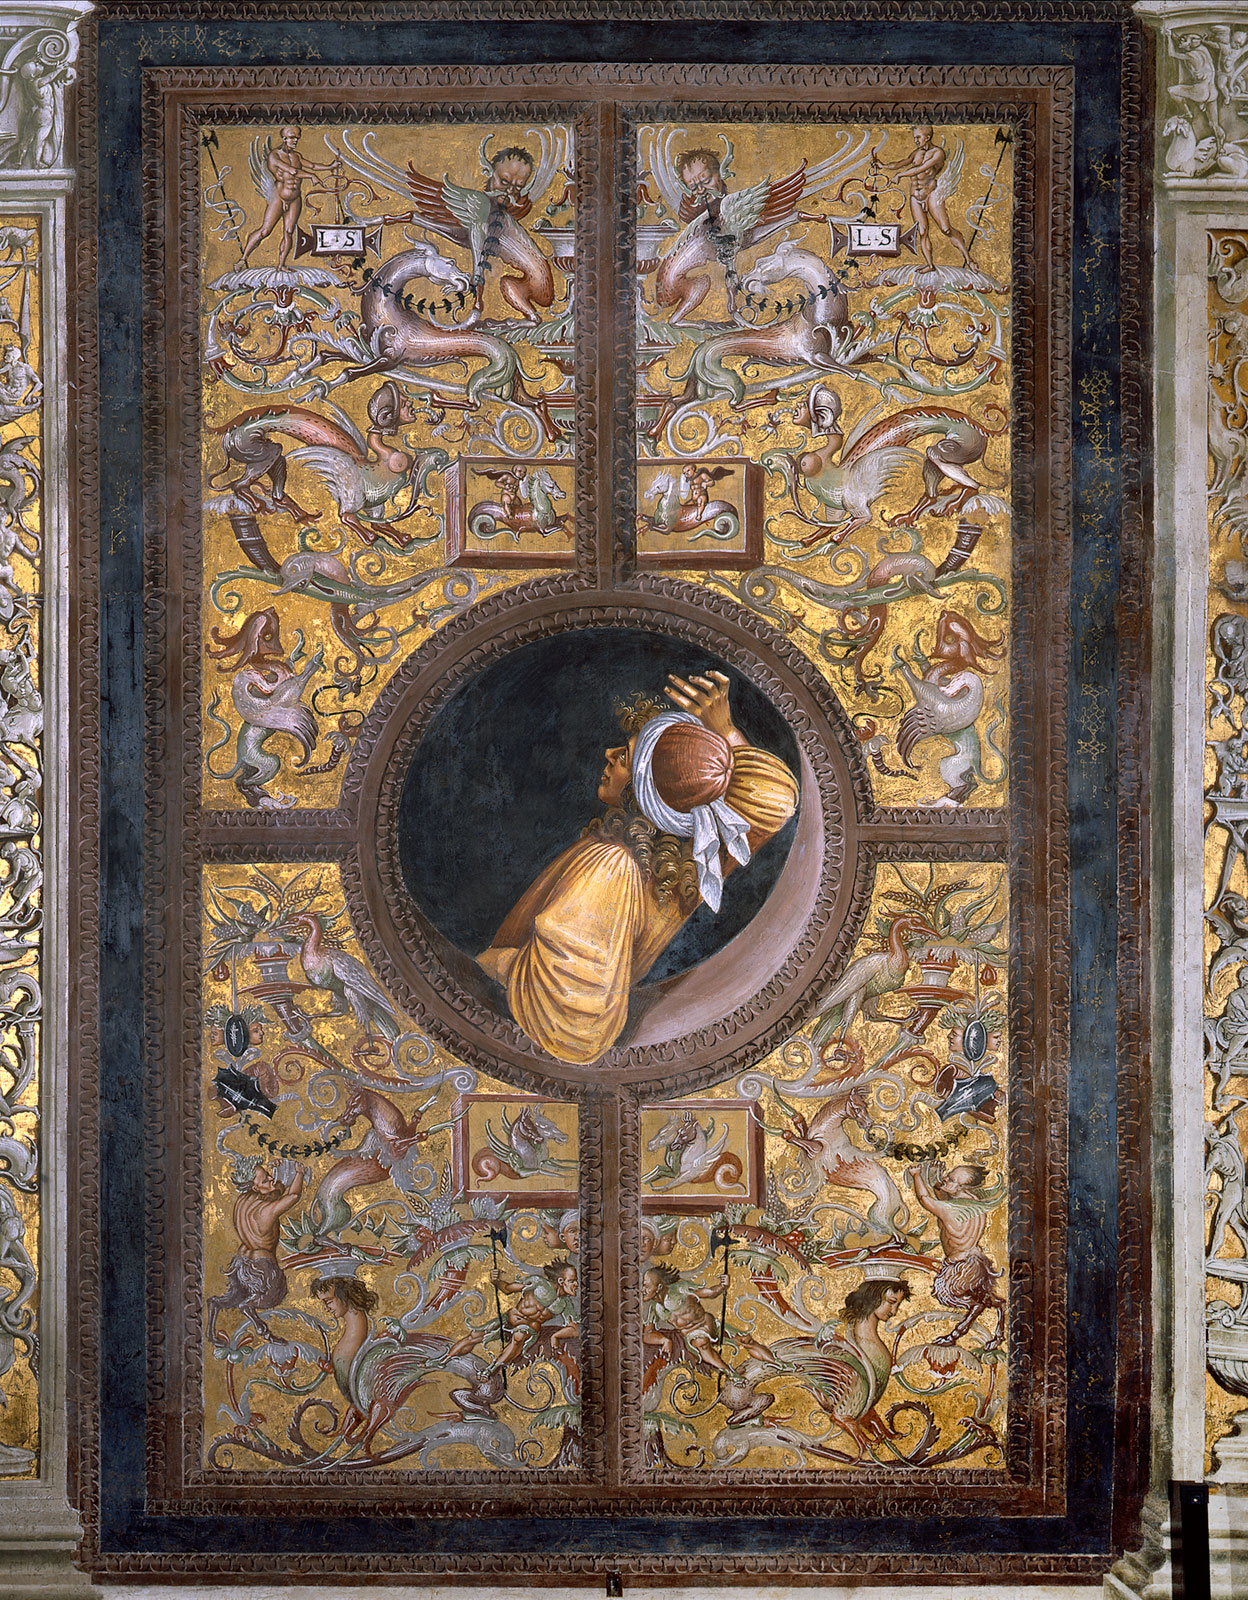 Luca Signorelli, Empedocle (1499-1504; affresco; Orvieto, Duomo, Cappella Nova)
